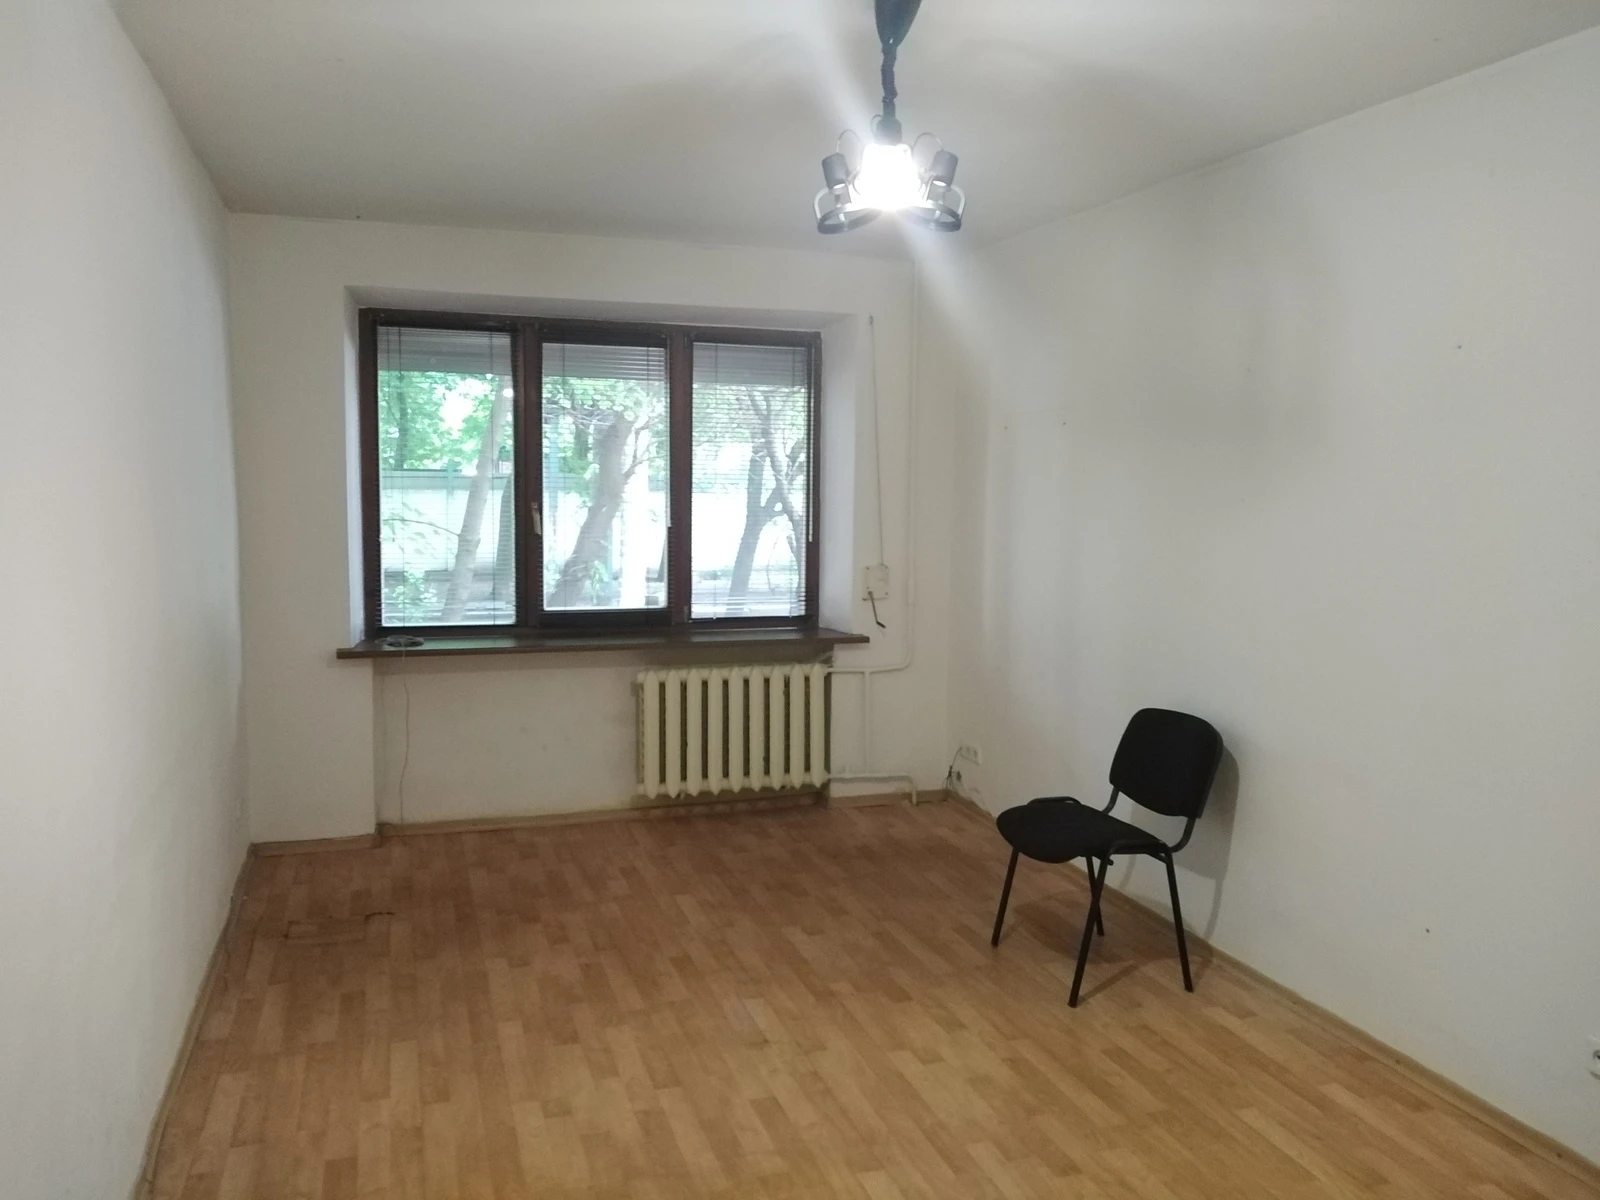 Продам квартиру под офис 33 метра на ул.Шмидта.